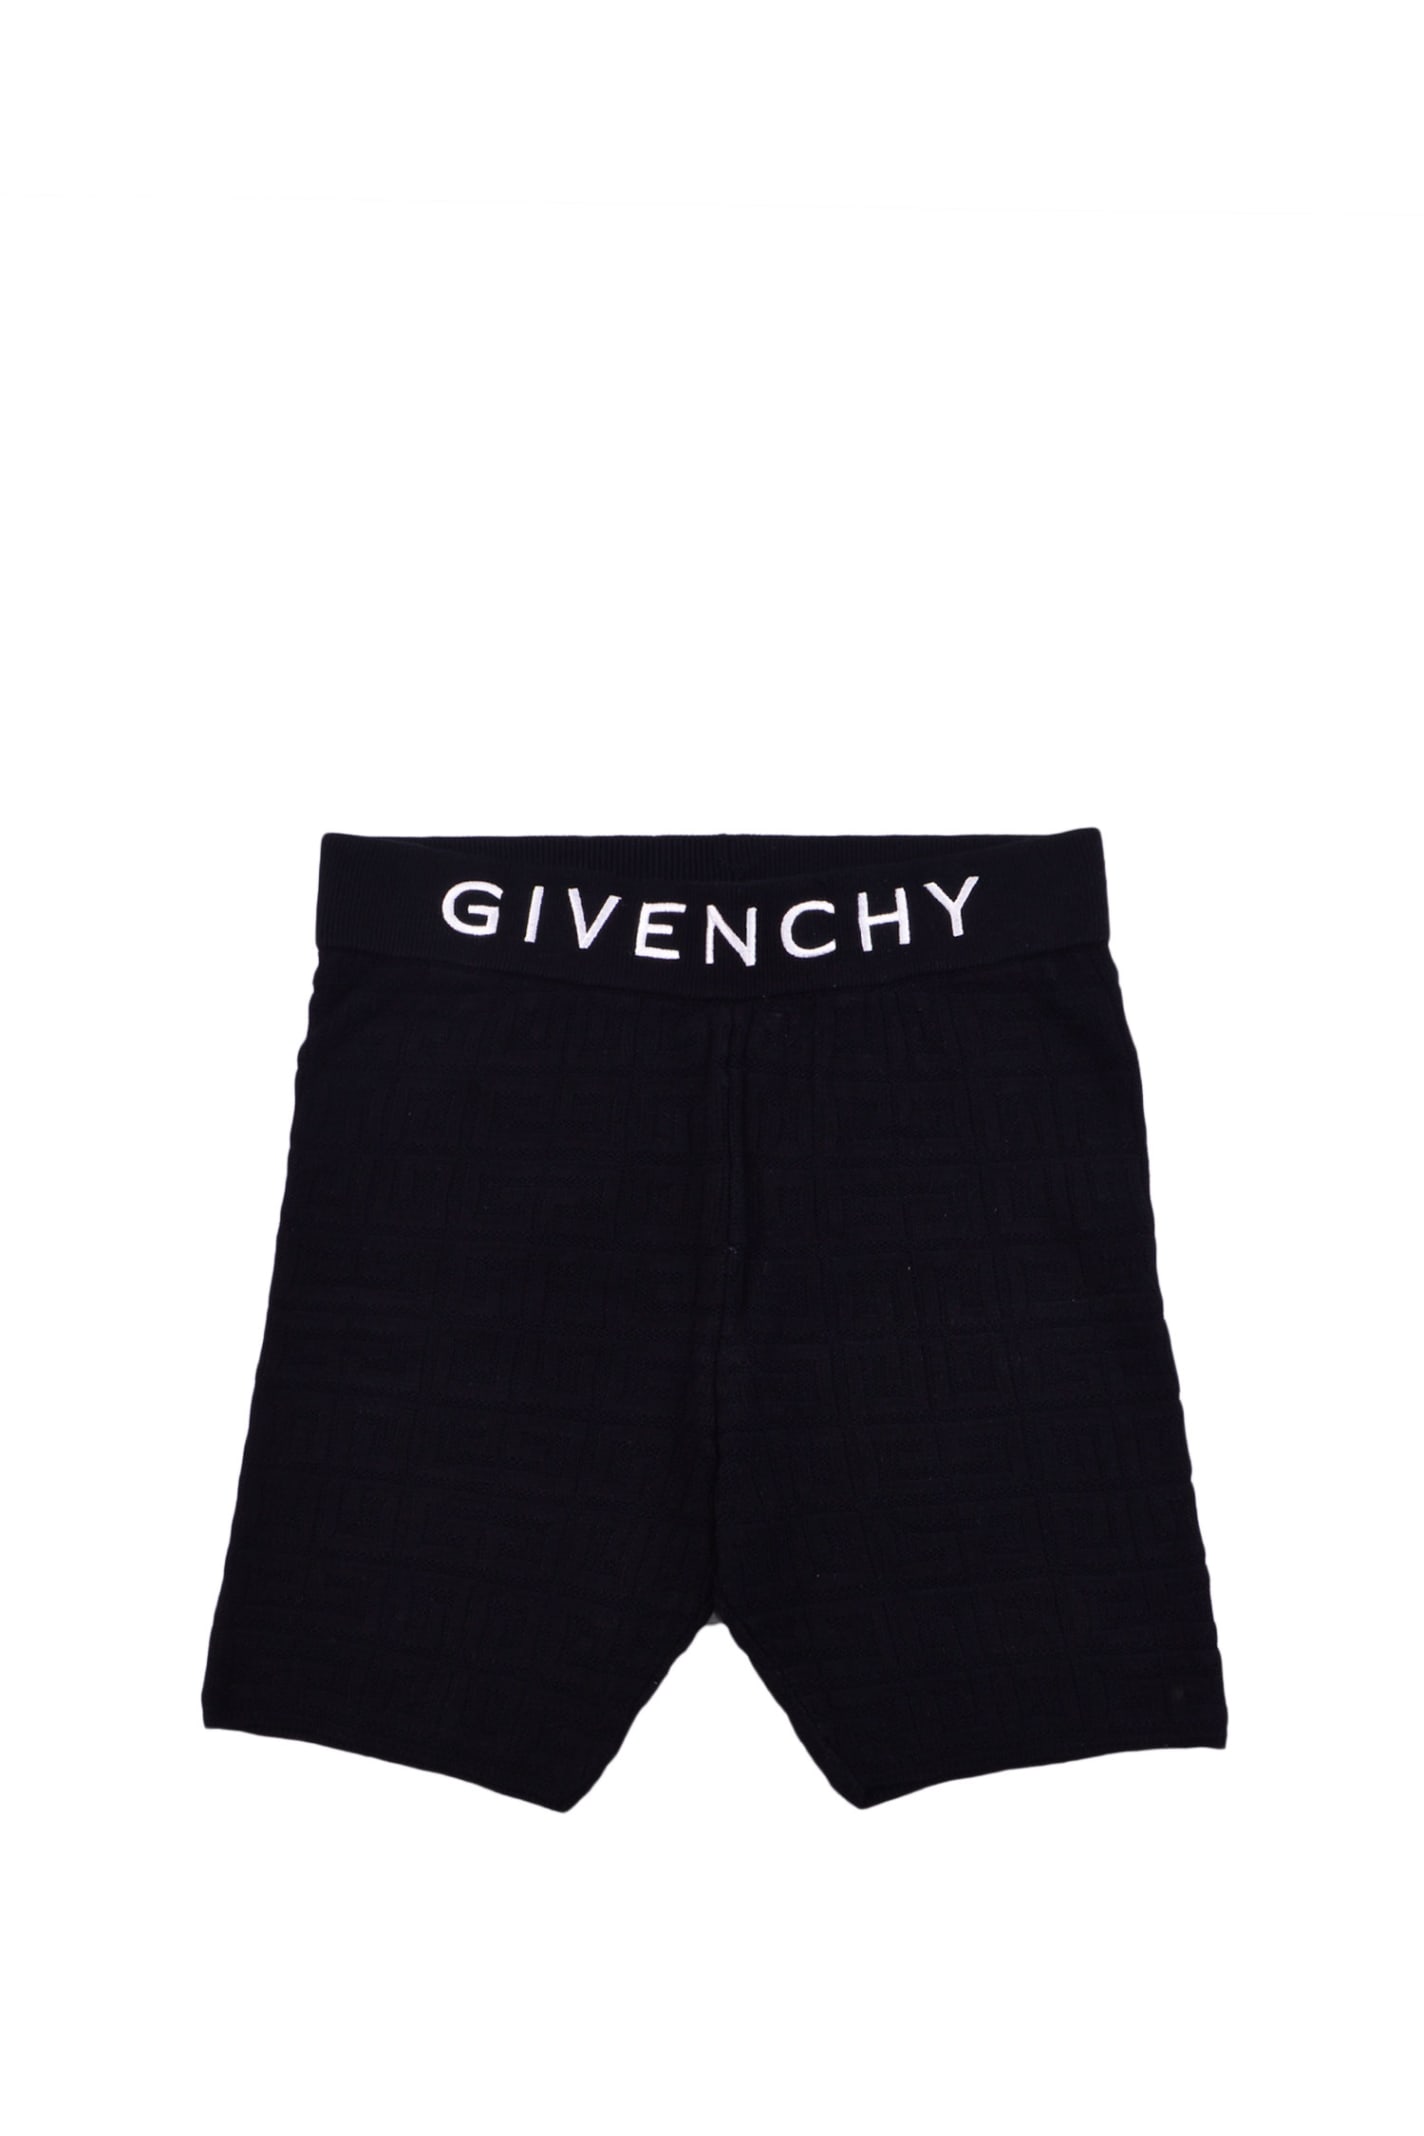 Givenchy Kids' Stretch Knit Shorts In Back